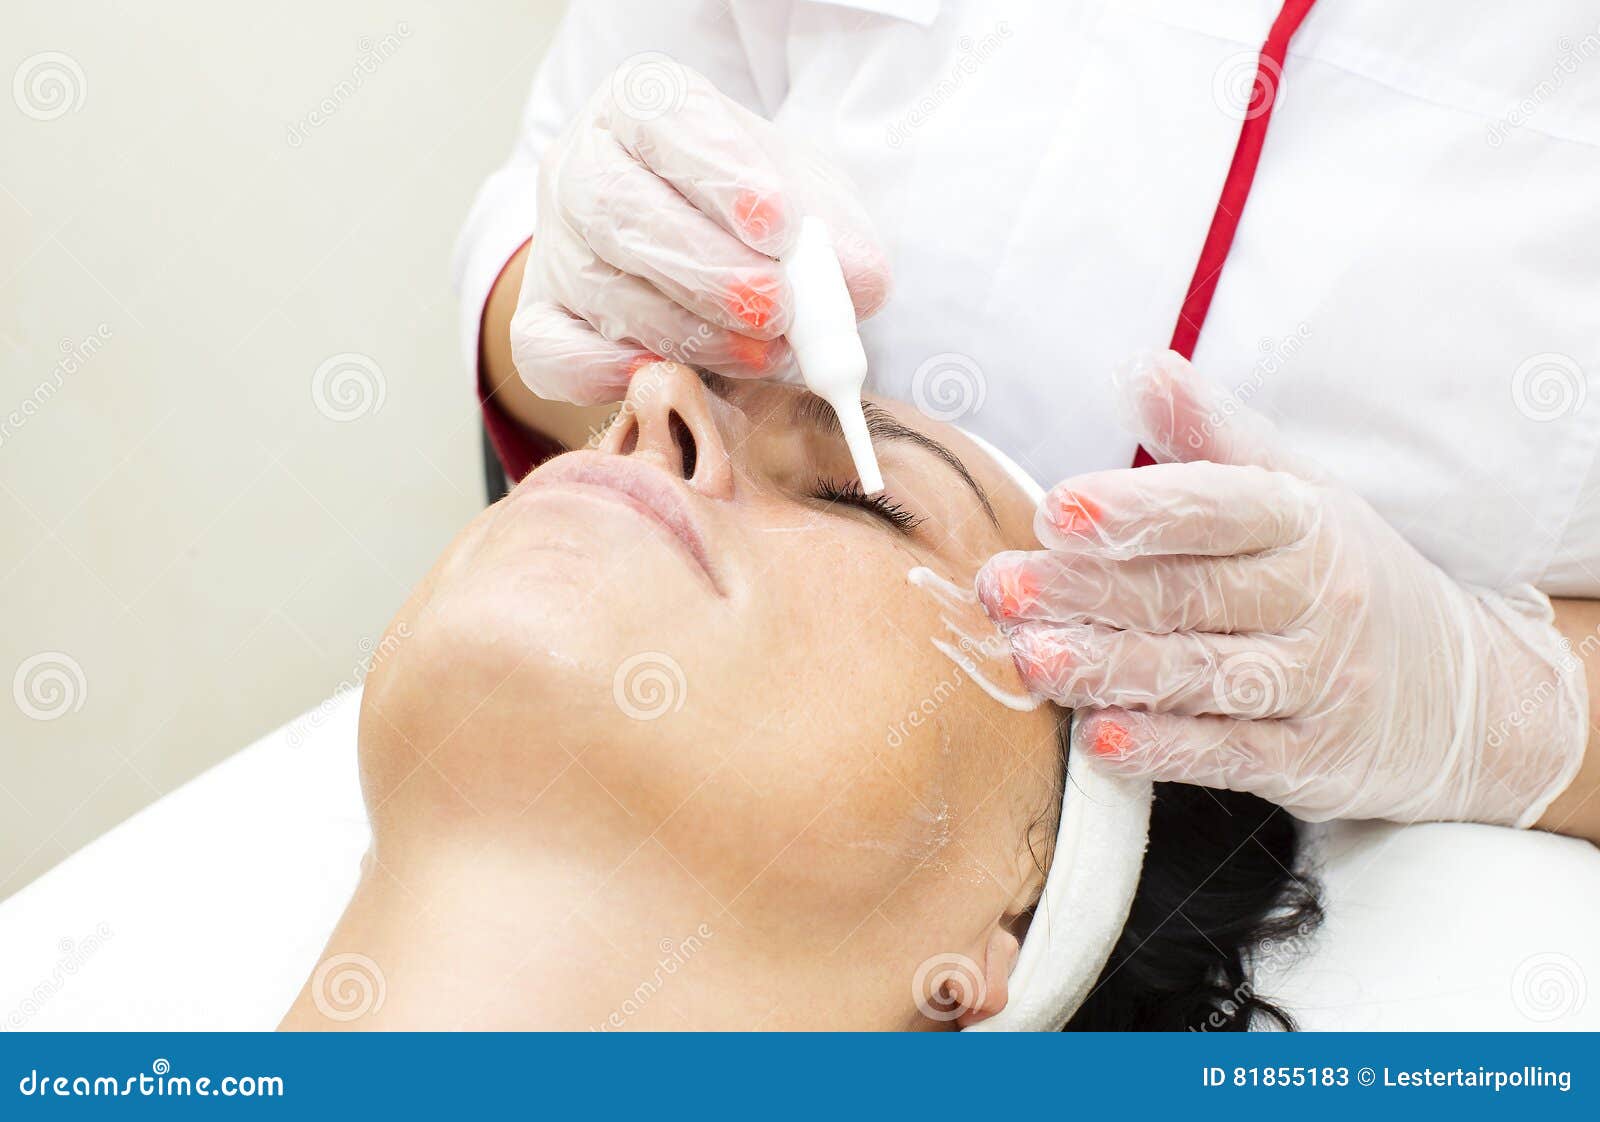 Process Of Massage And Facials Stock Image Image Of Facials Care 81855183